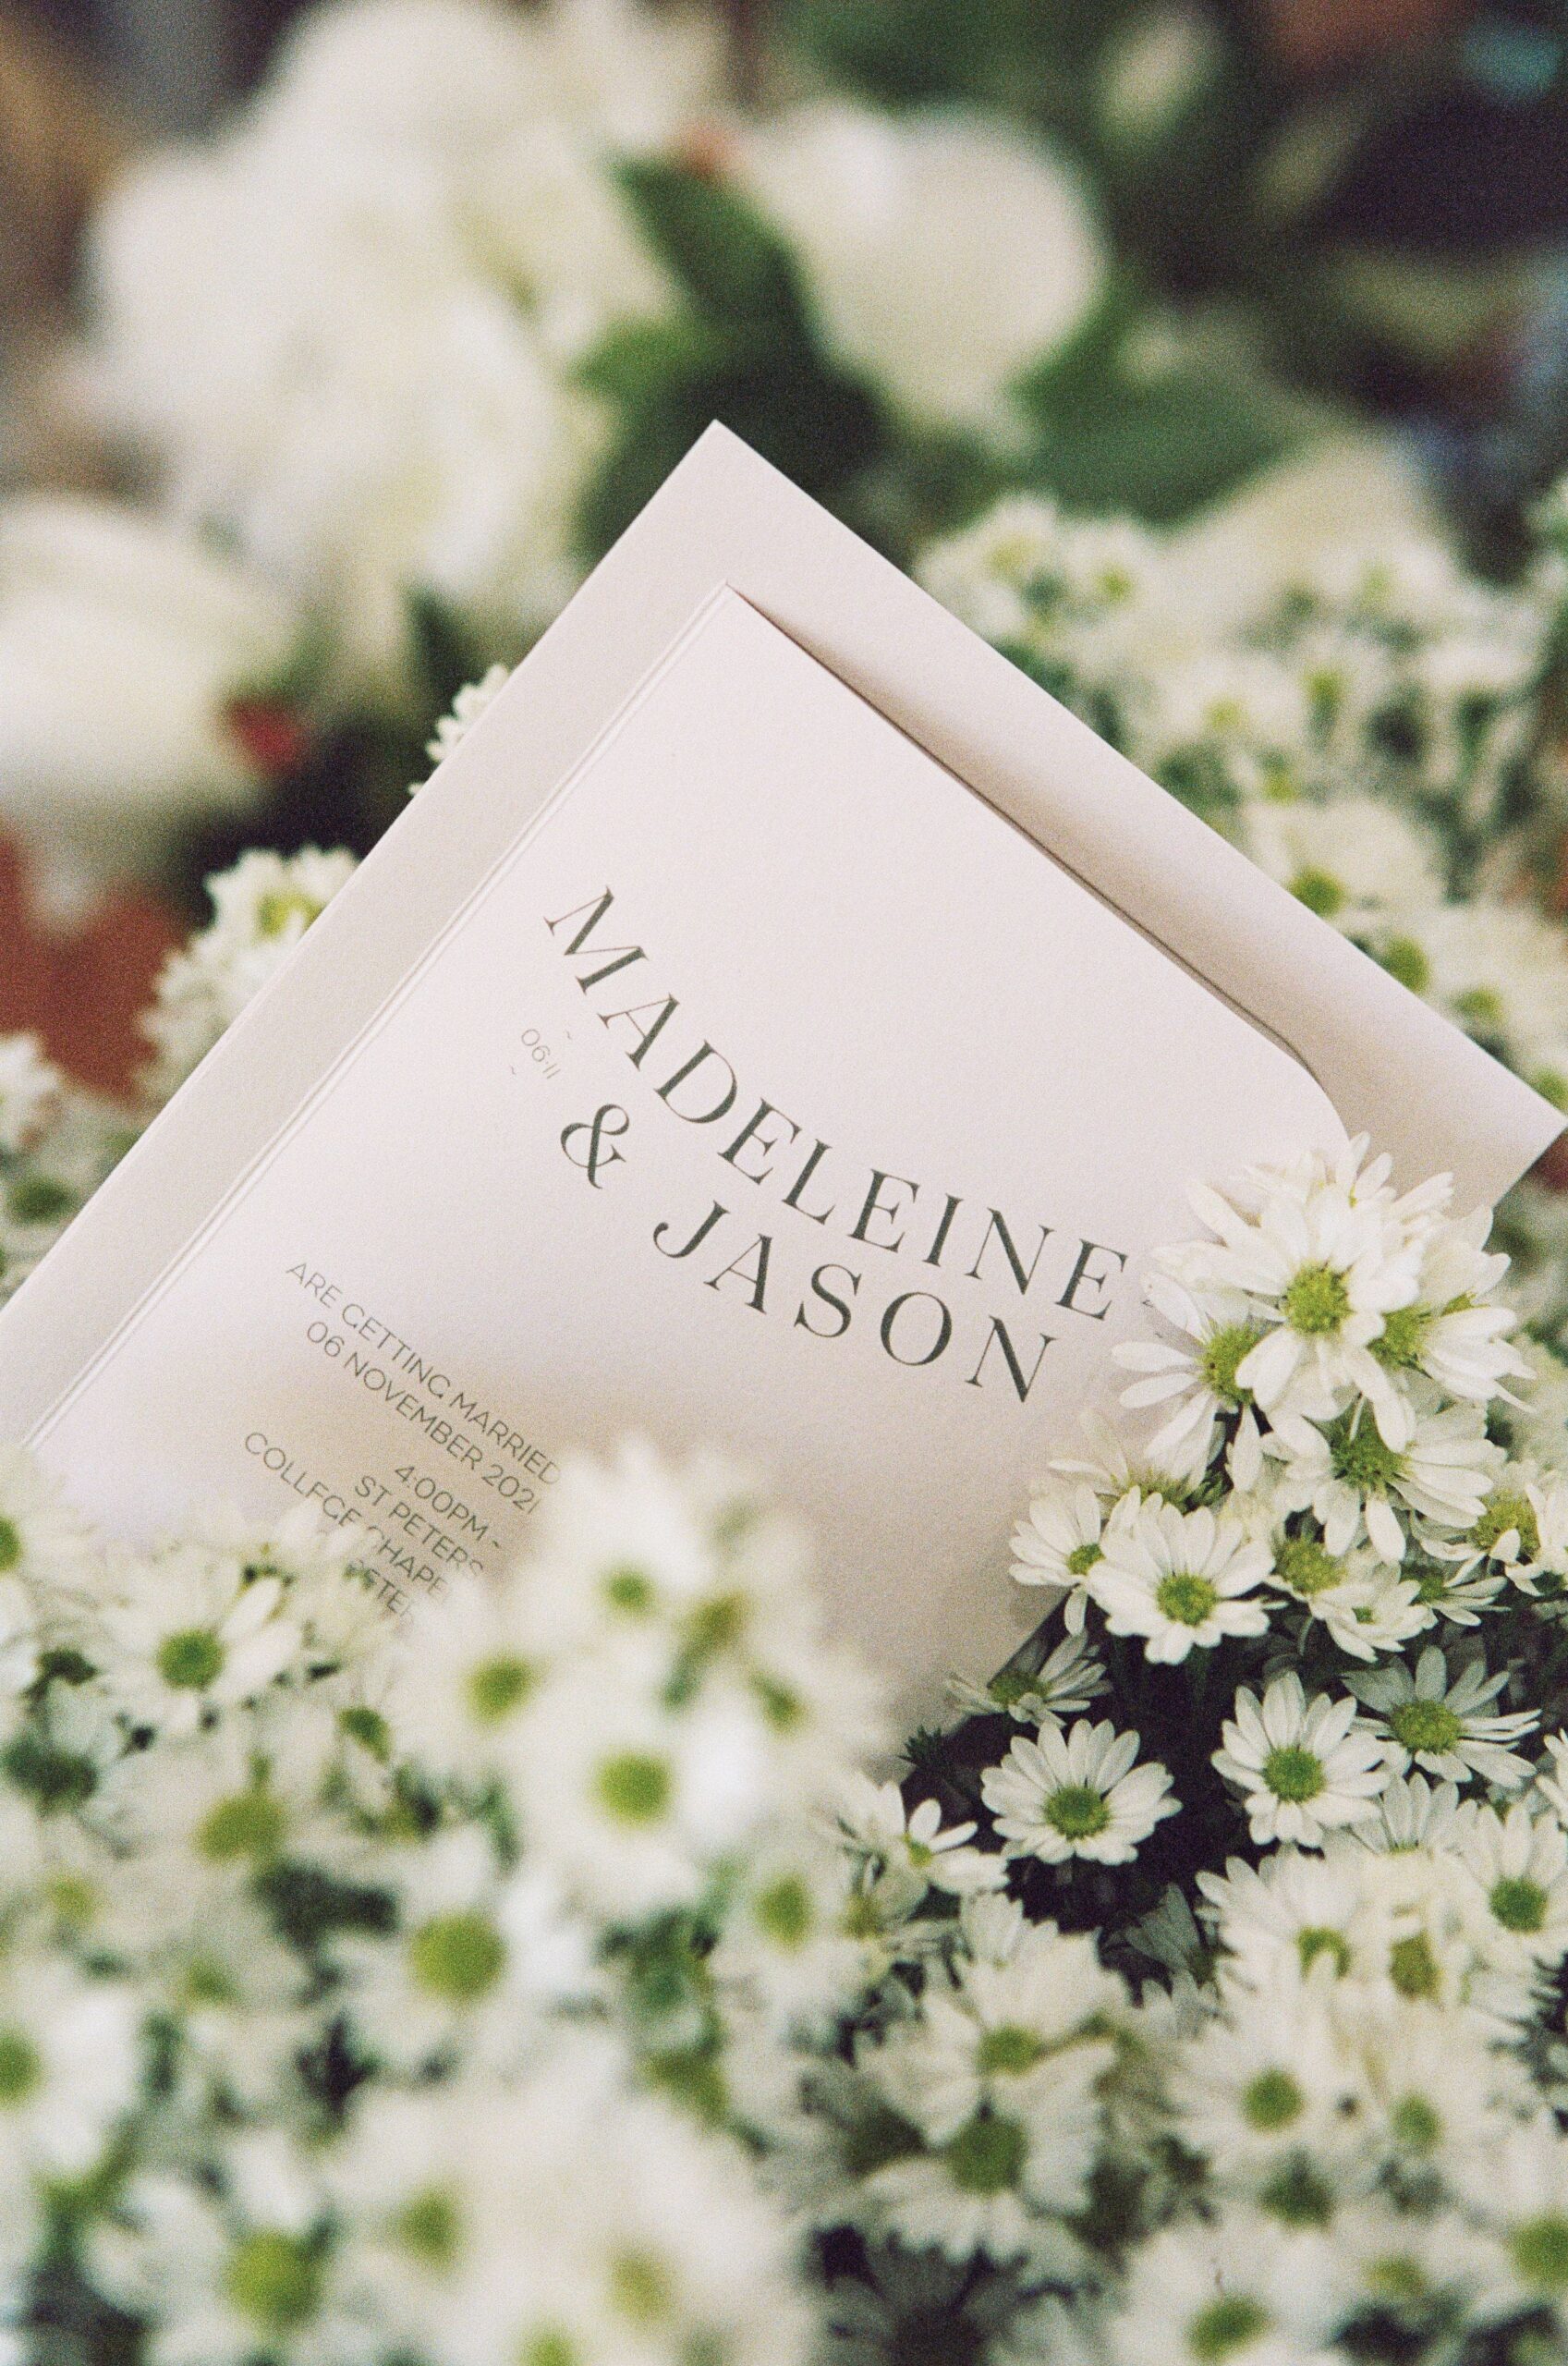 Invite titled Madeleine & Jason sitting amongst white flowers